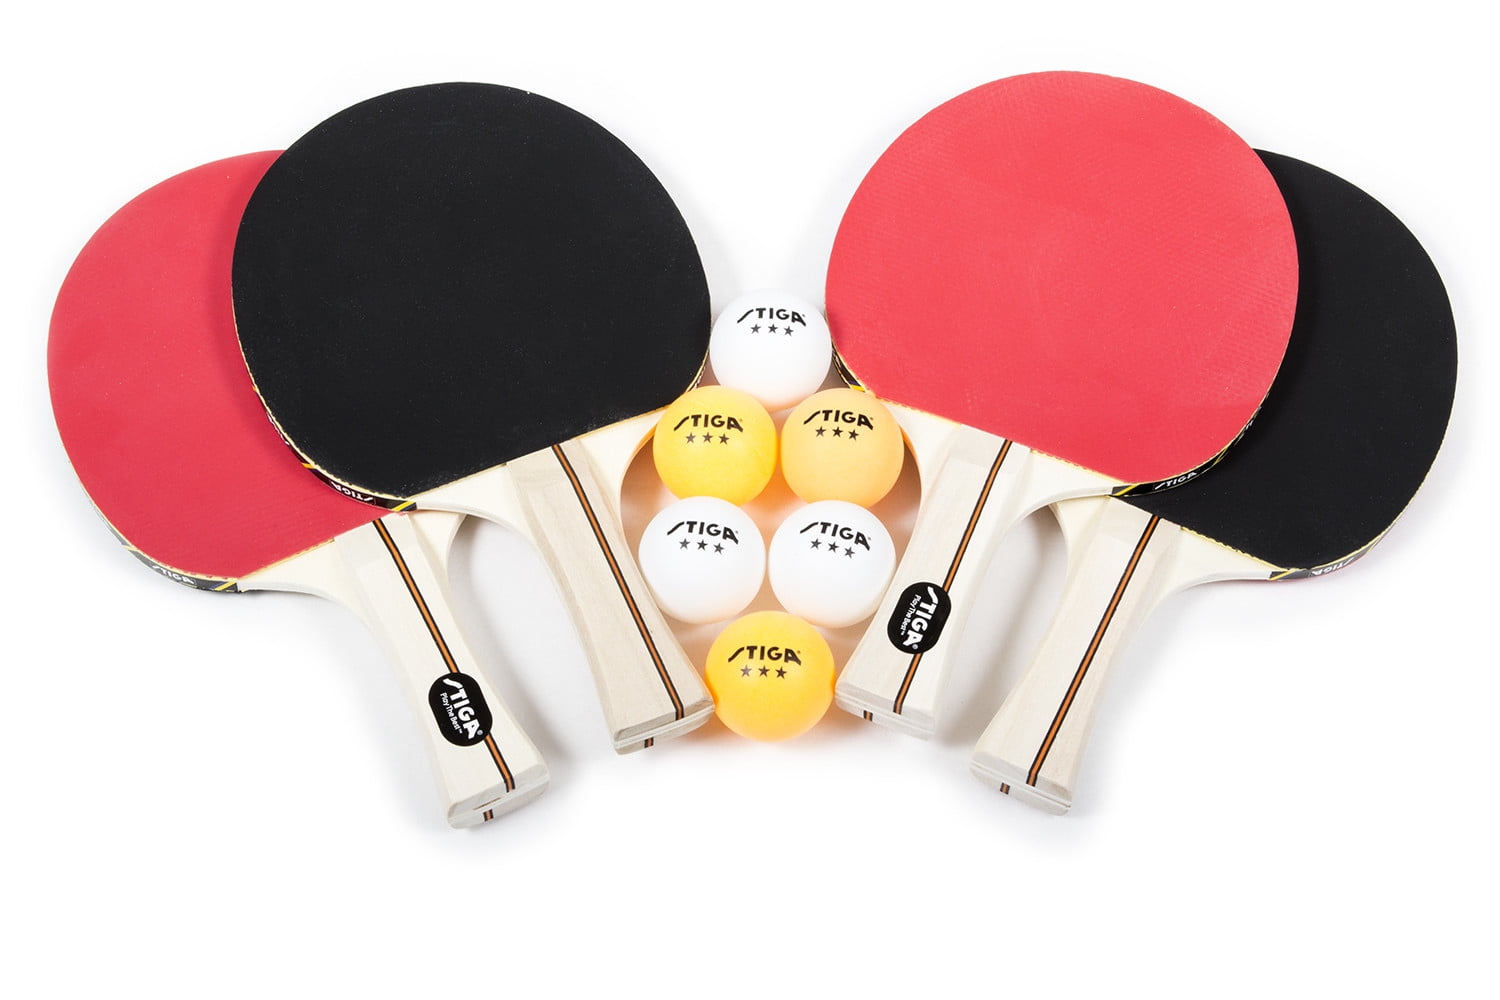 RACKET 4-STAR RED FLAME VSR Pro Table Tennis Racket MK T.T 